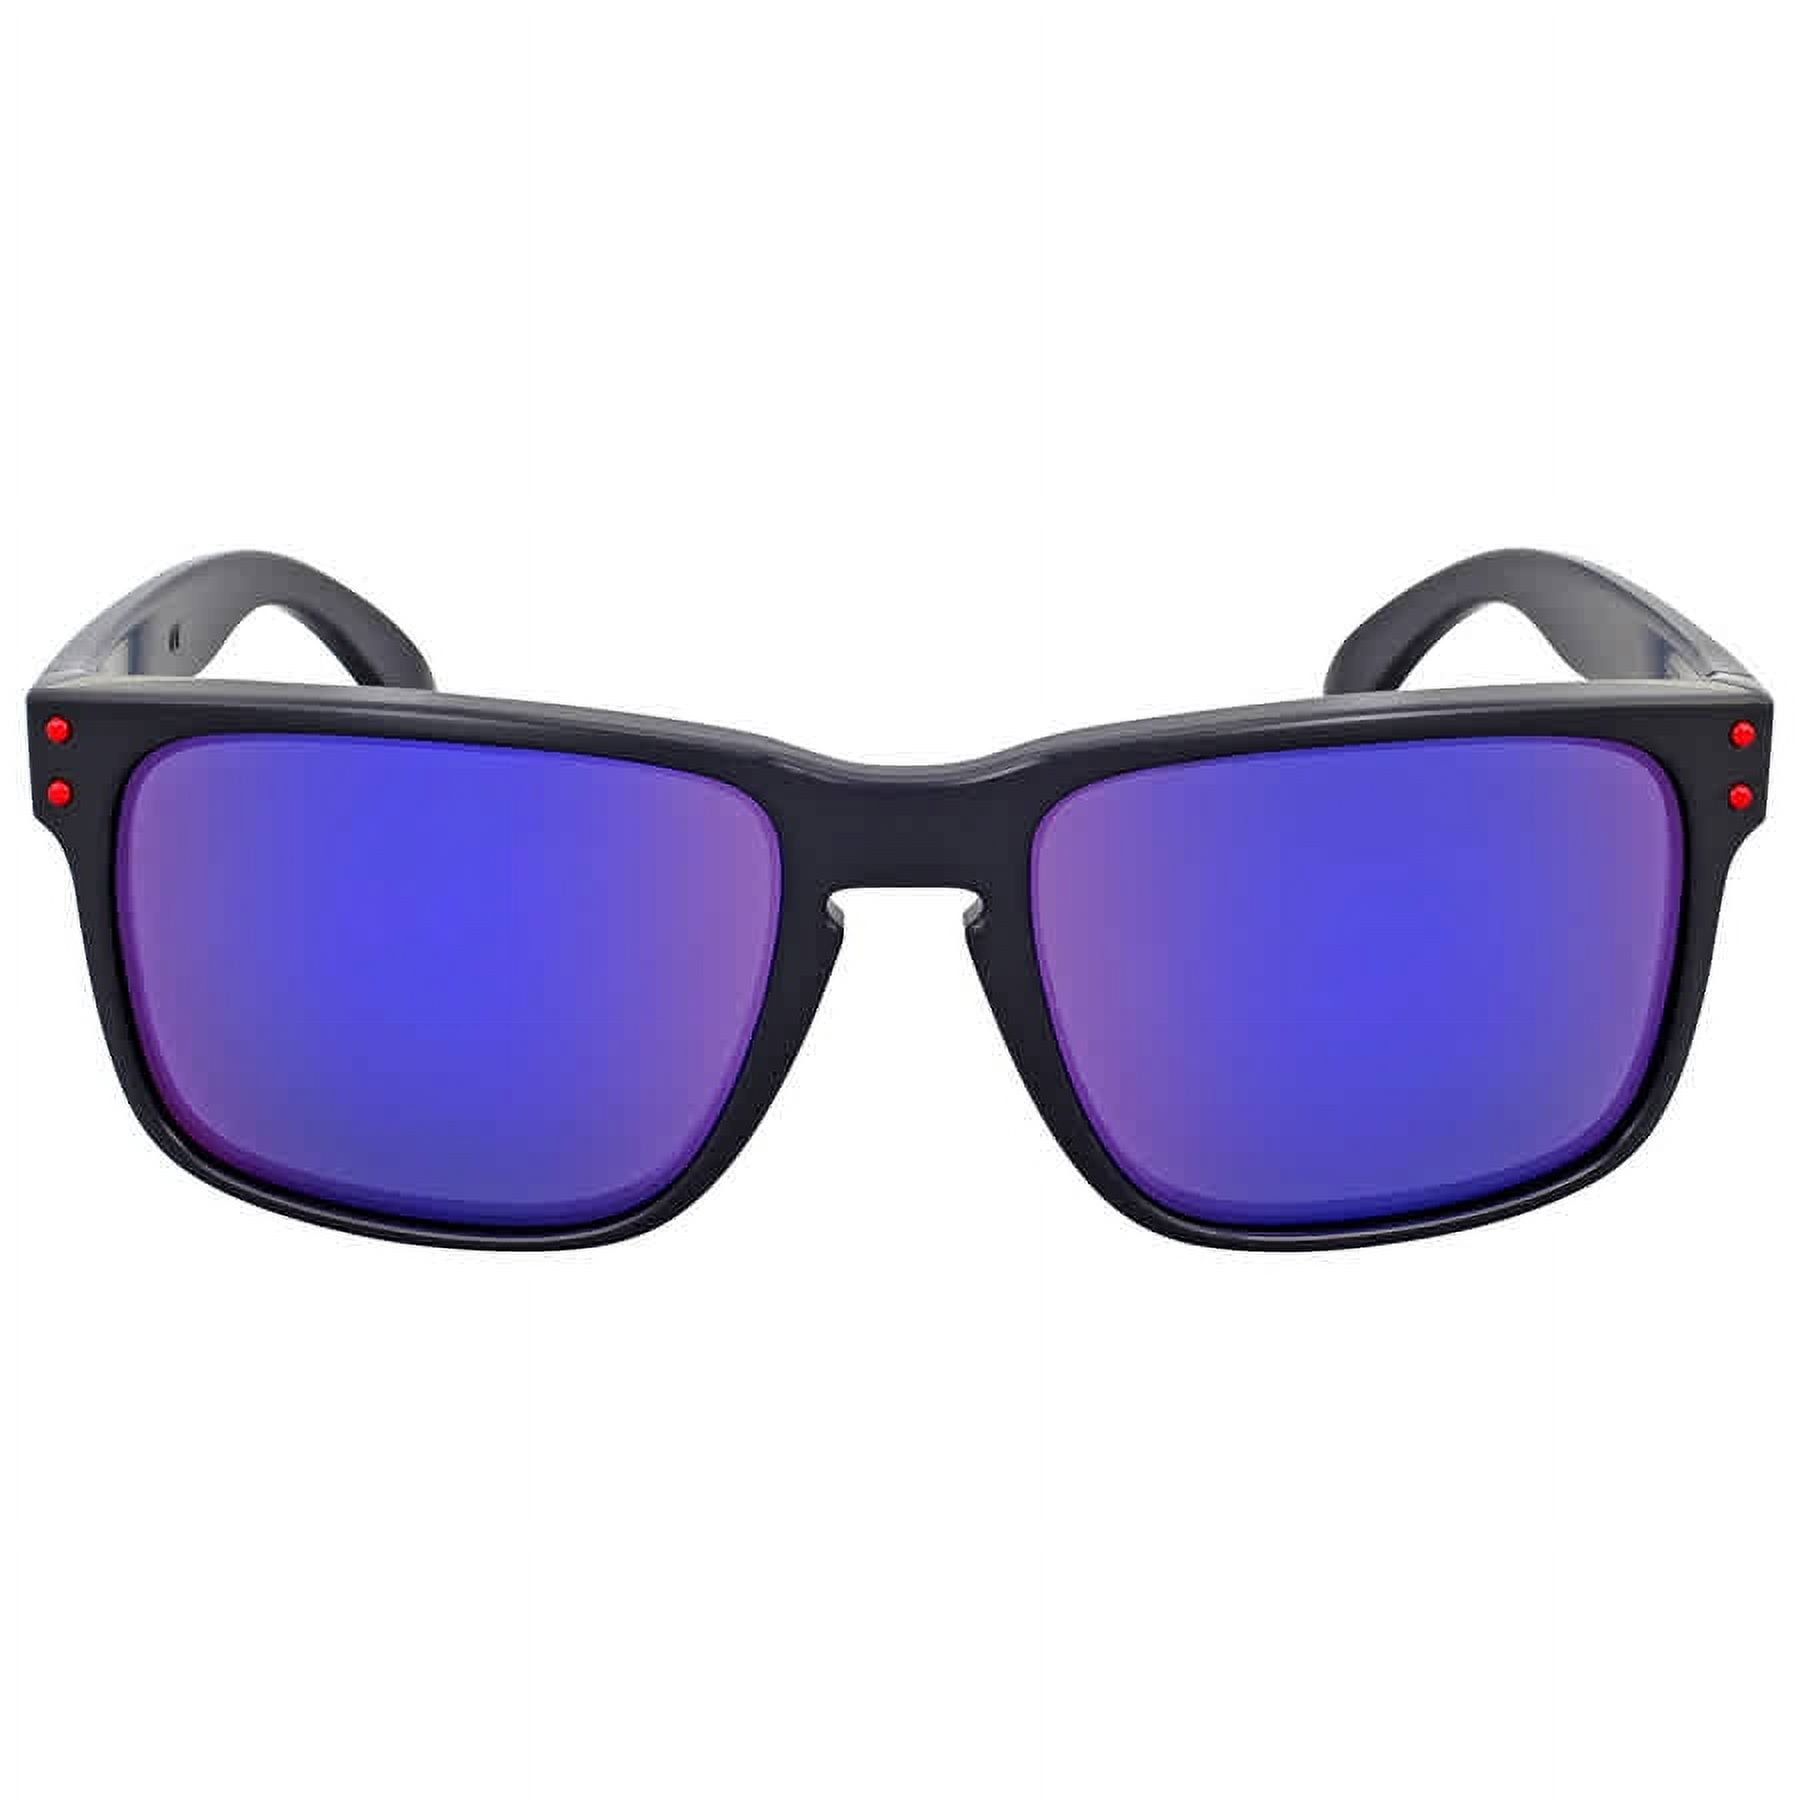 Oakley Men's Holbrook Sunglasses: Classic Active Shades